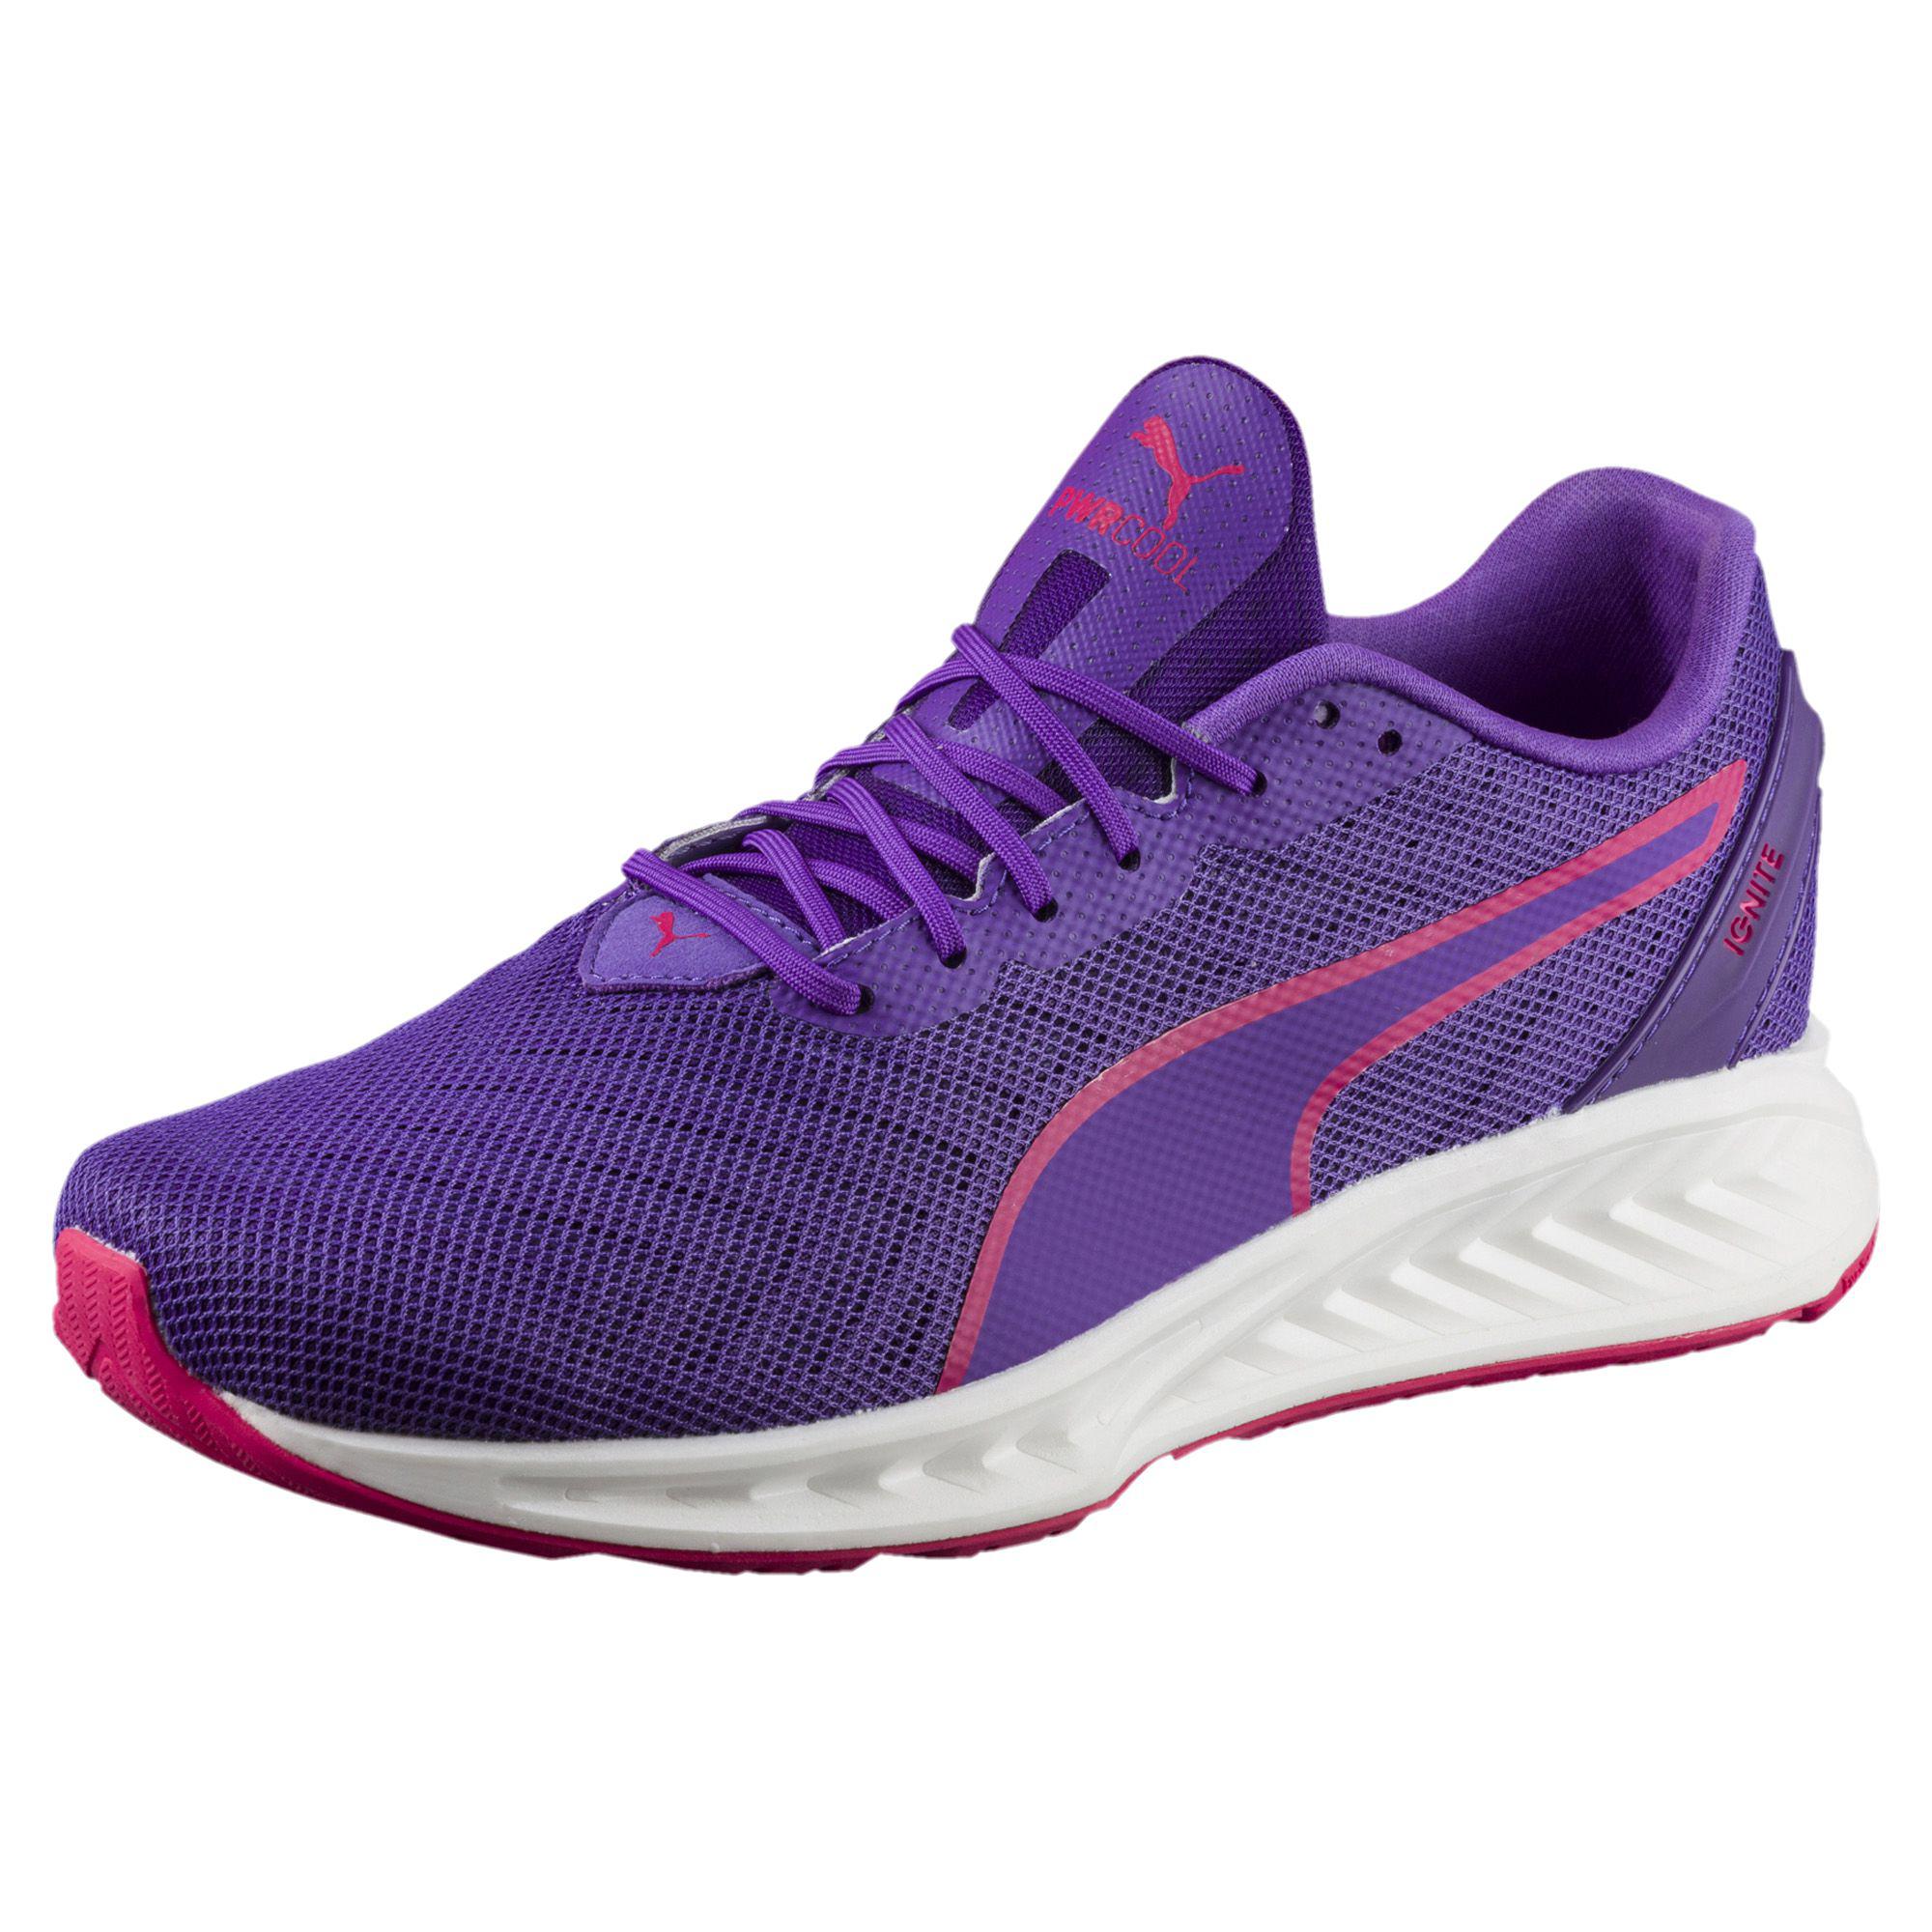 PUMA Rubber Ignite 3 Pwrcool Women's Running Shoes in Purple - Lyst